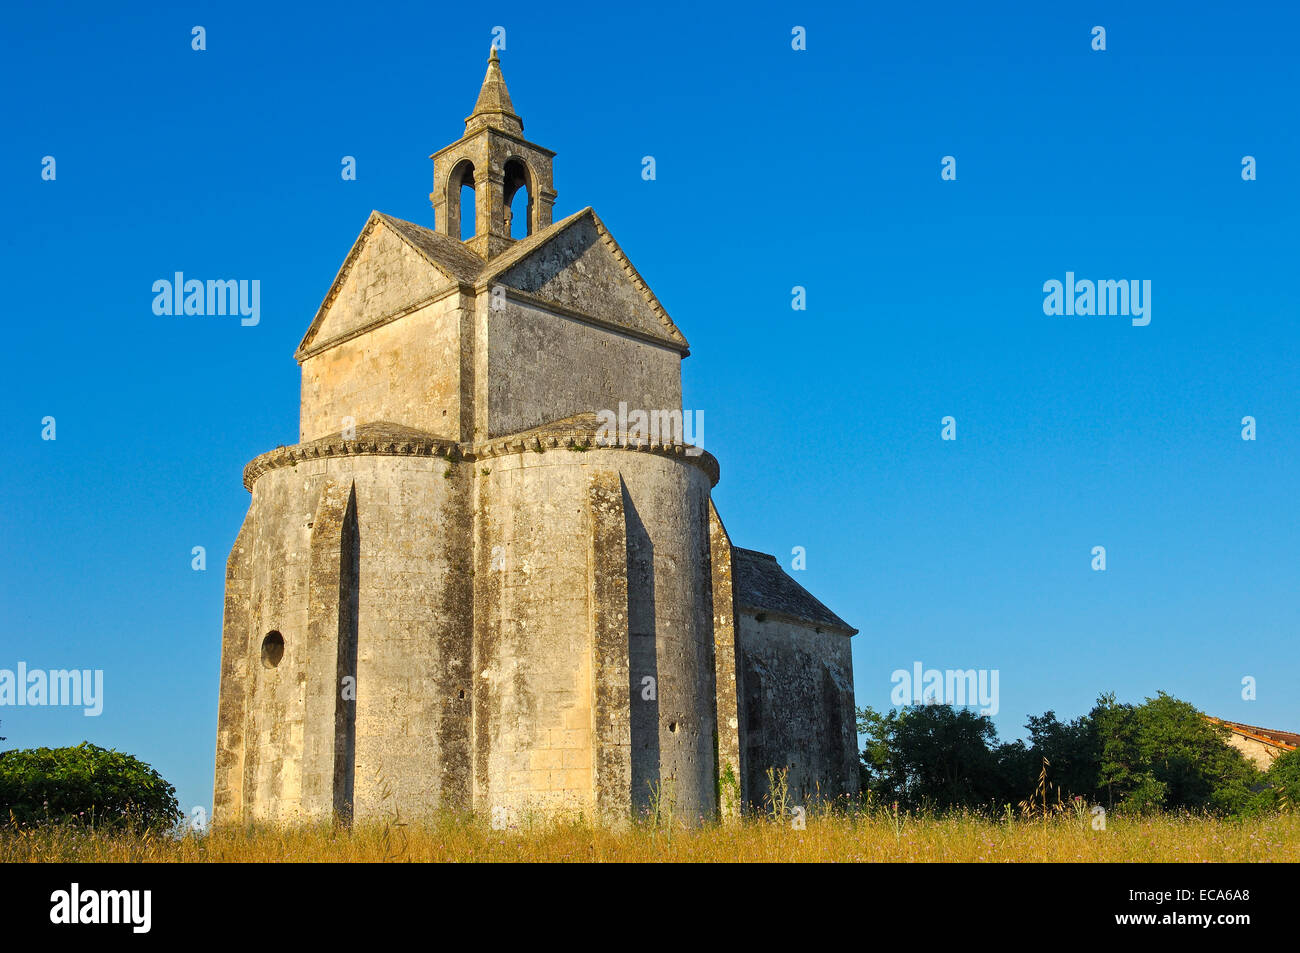 Chapelle St-Croix, Montmajour abbey near Arles, Arles, Bouches du Rhone, Provence, France, Europe Stock Photo